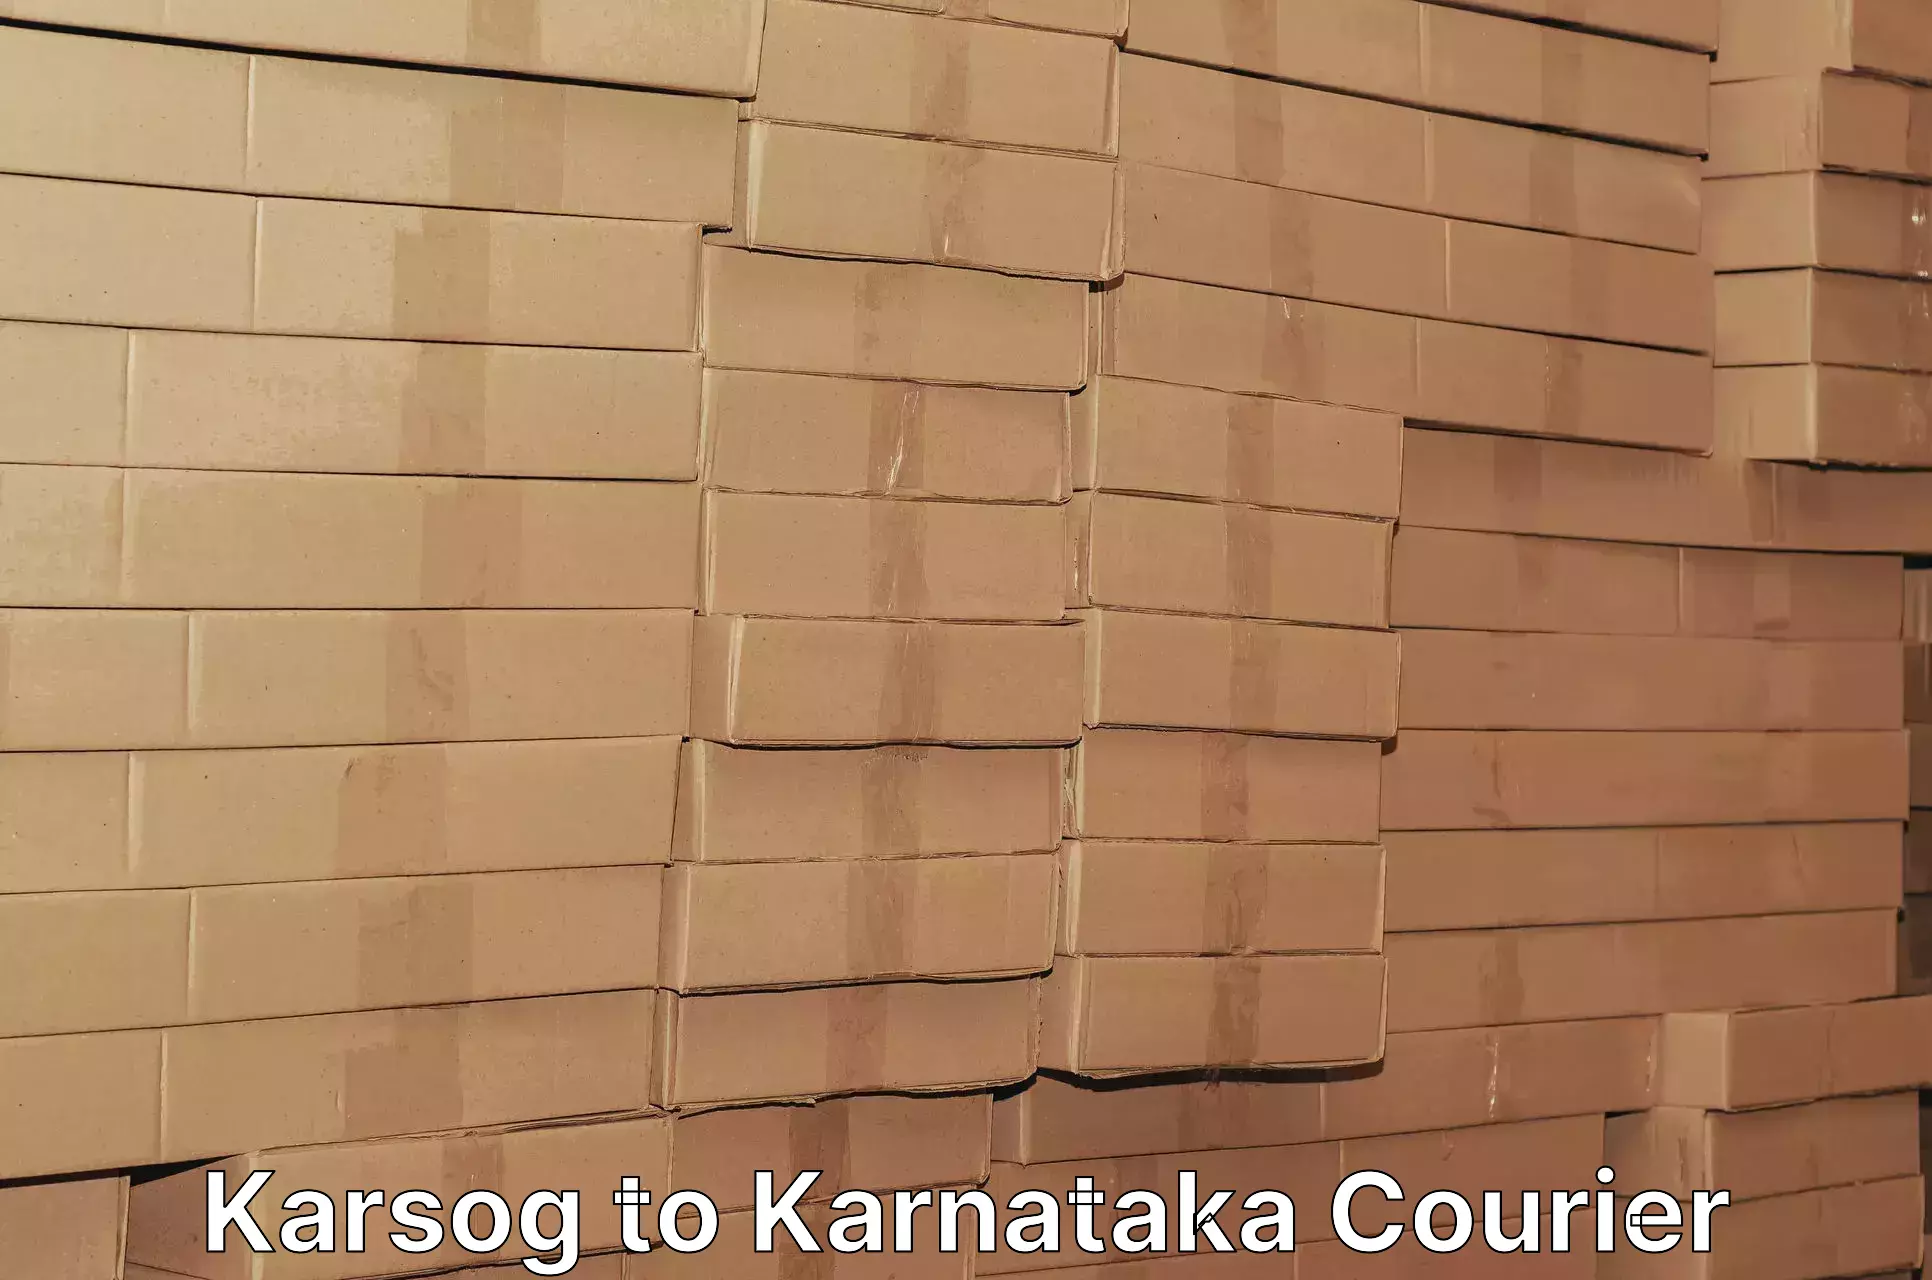 Courier service comparison Karsog to Karnataka